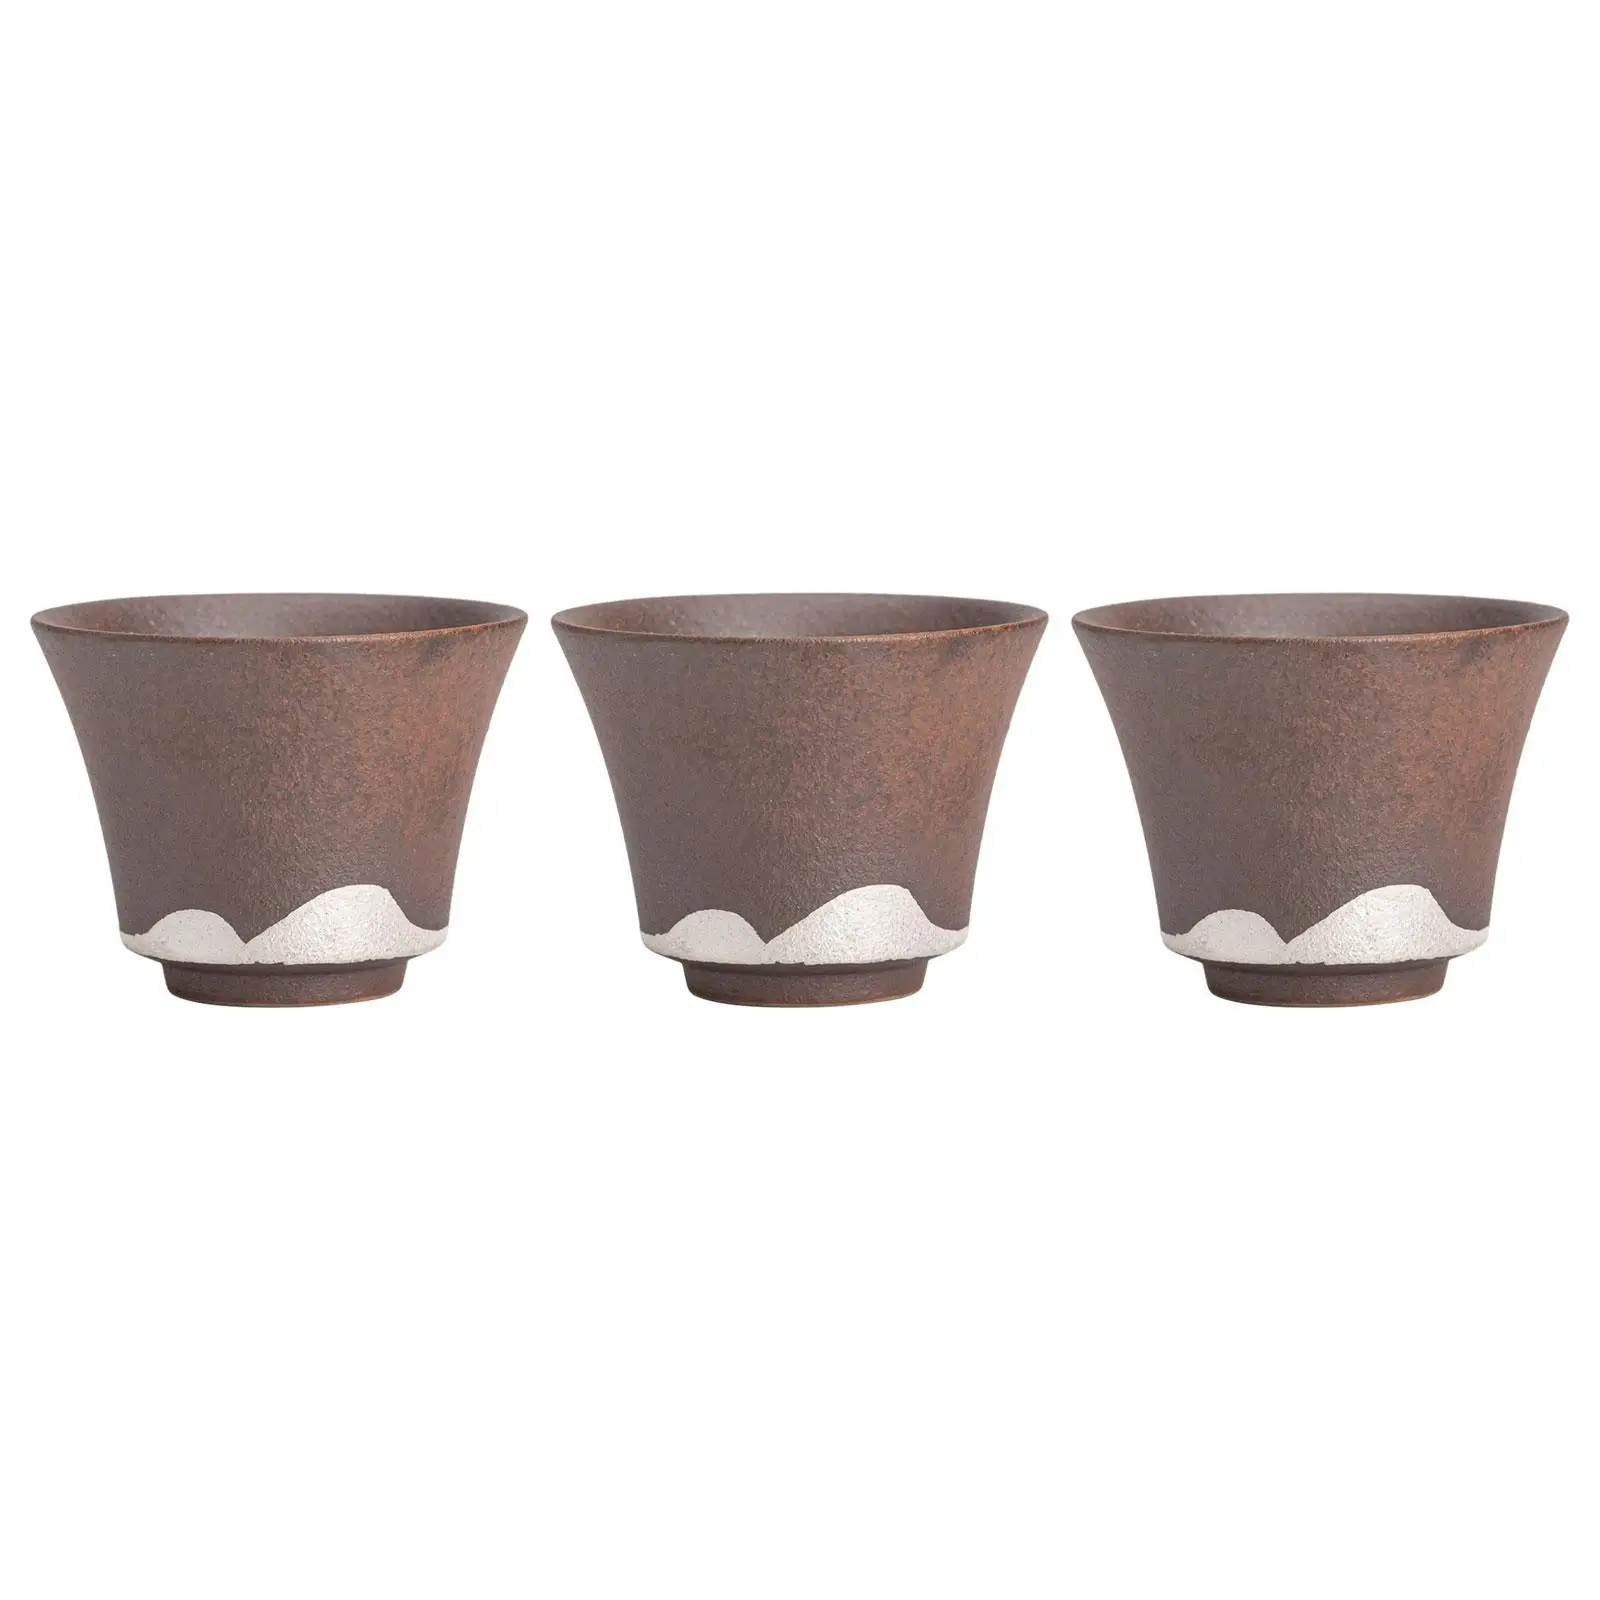 3Pcs Teacup Set Ceramic Teapot Kiln Change Drinkware without Handles Tea Mug for Tea House Hiking Tea Lovers Gift Home Hotel